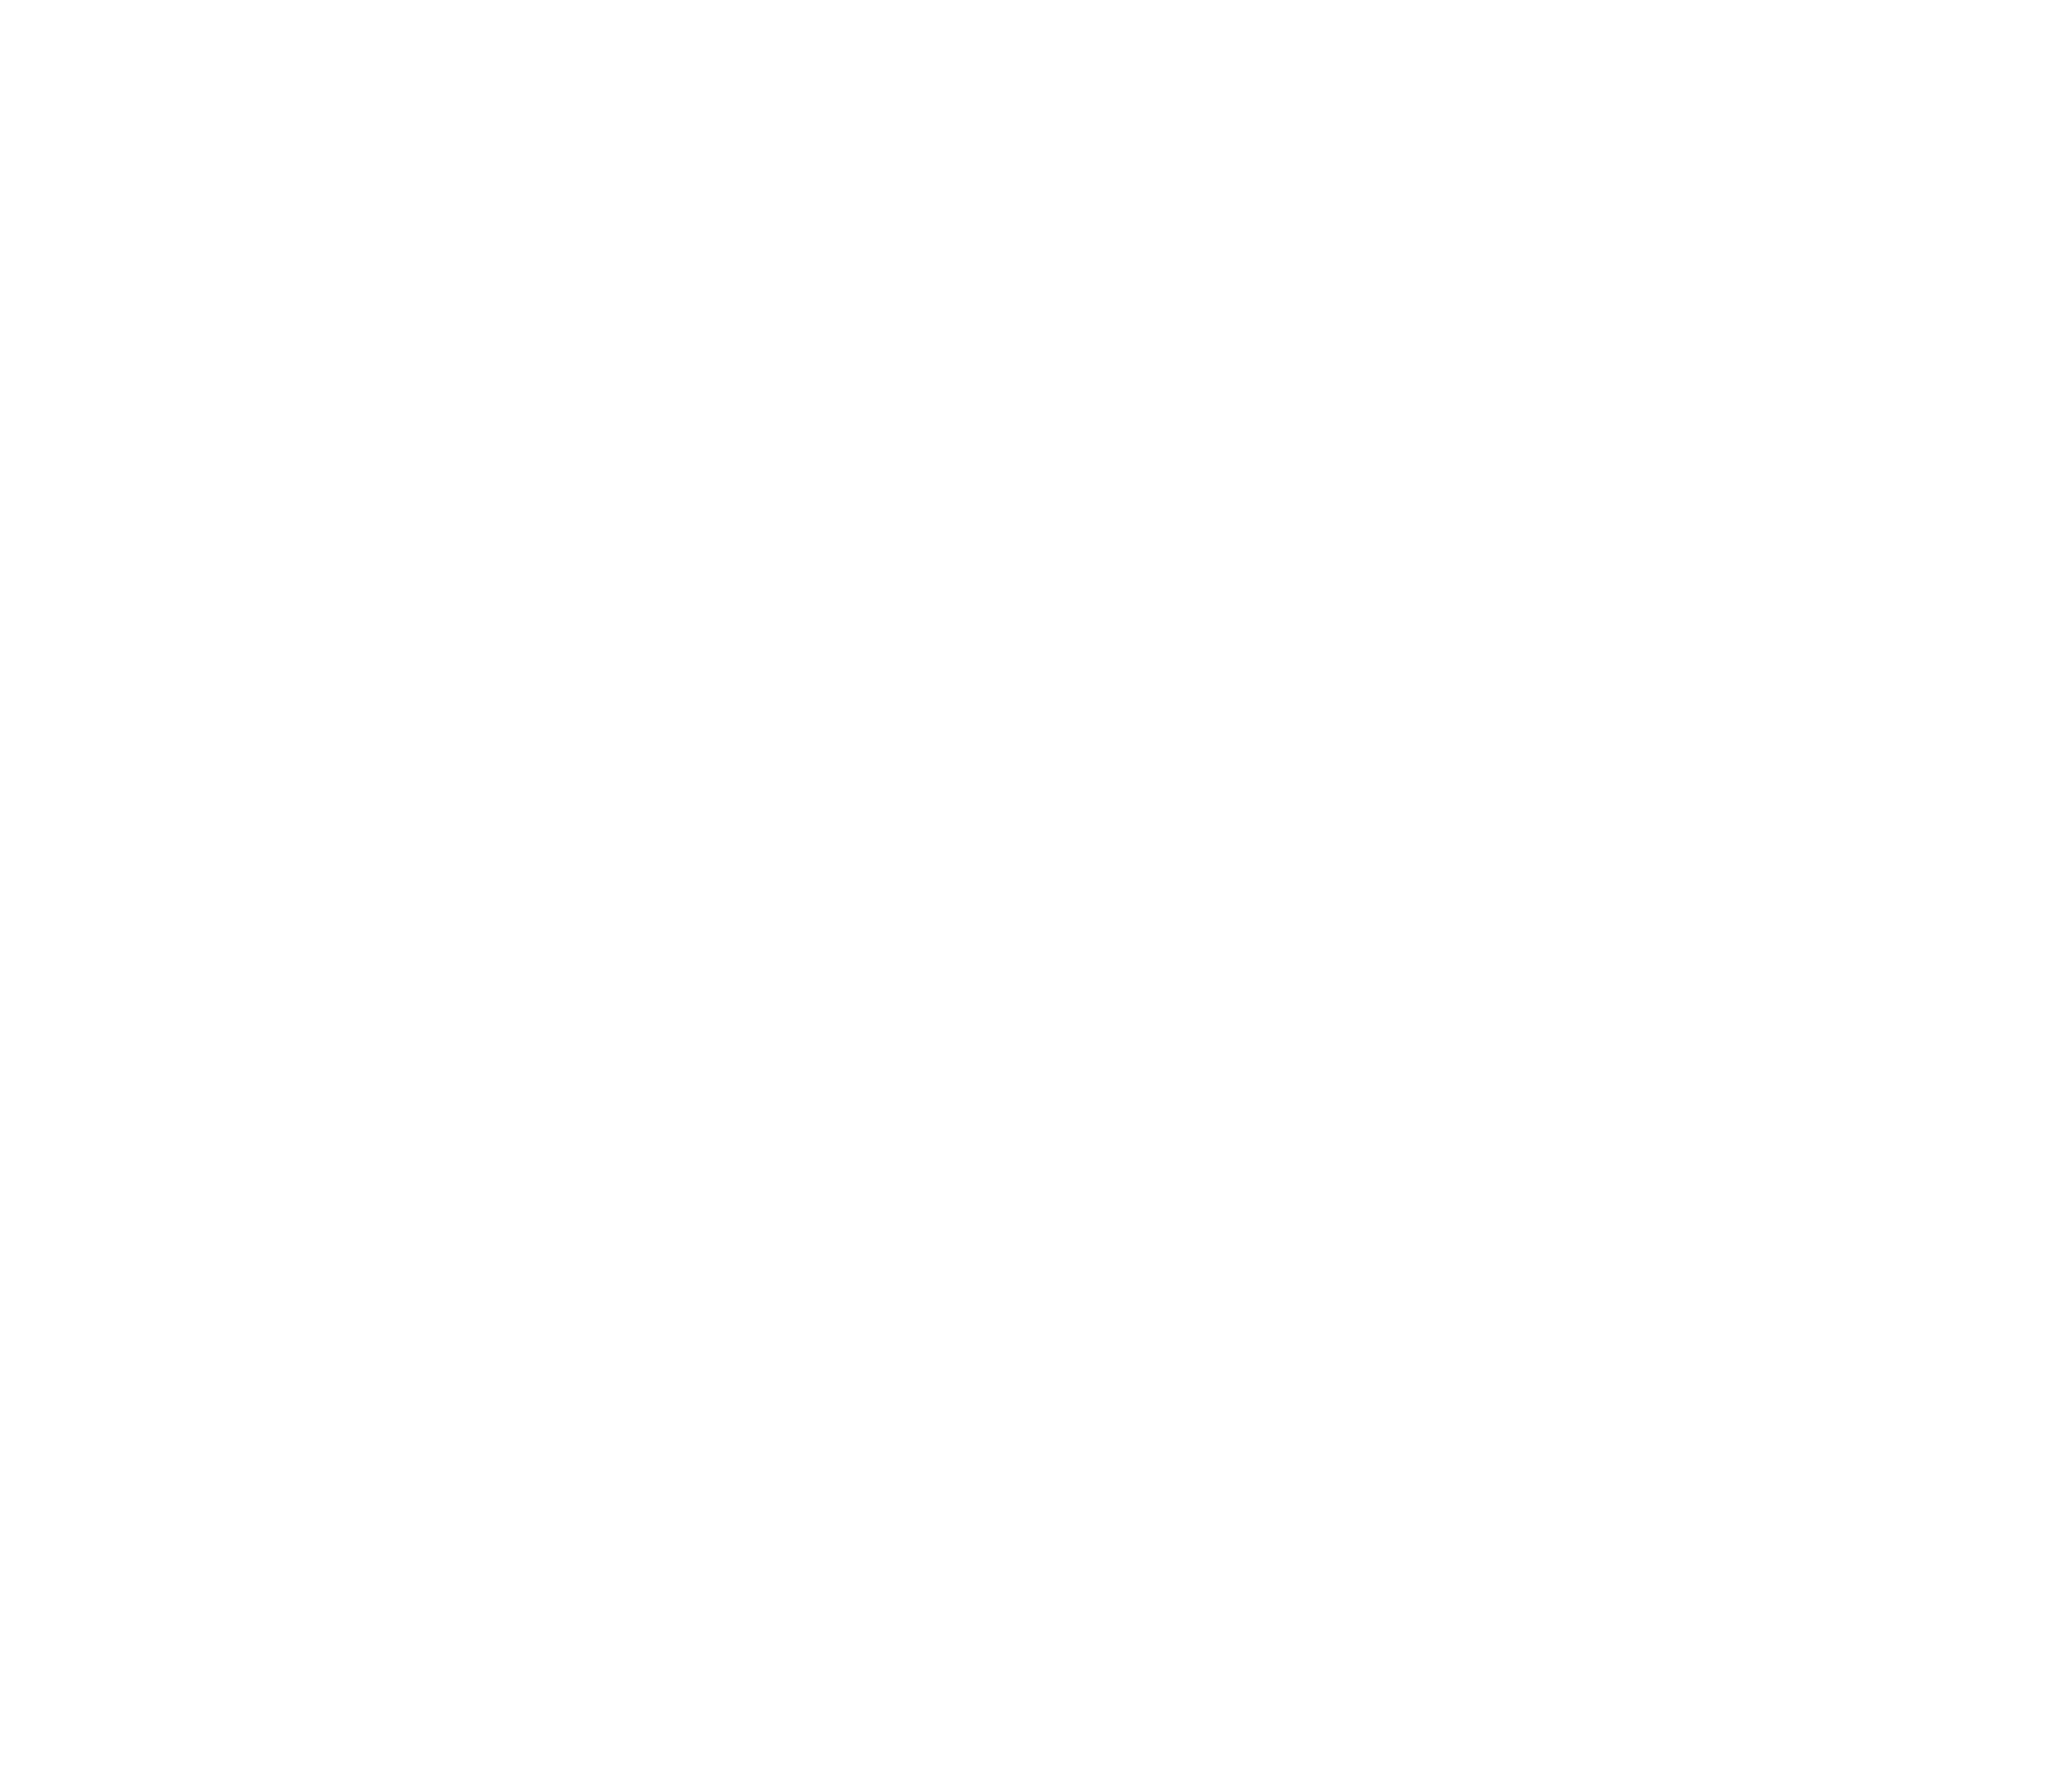 https://www.reslogproject.org/en/wp-content/uploads/2022/08/res1-01-01-01.png